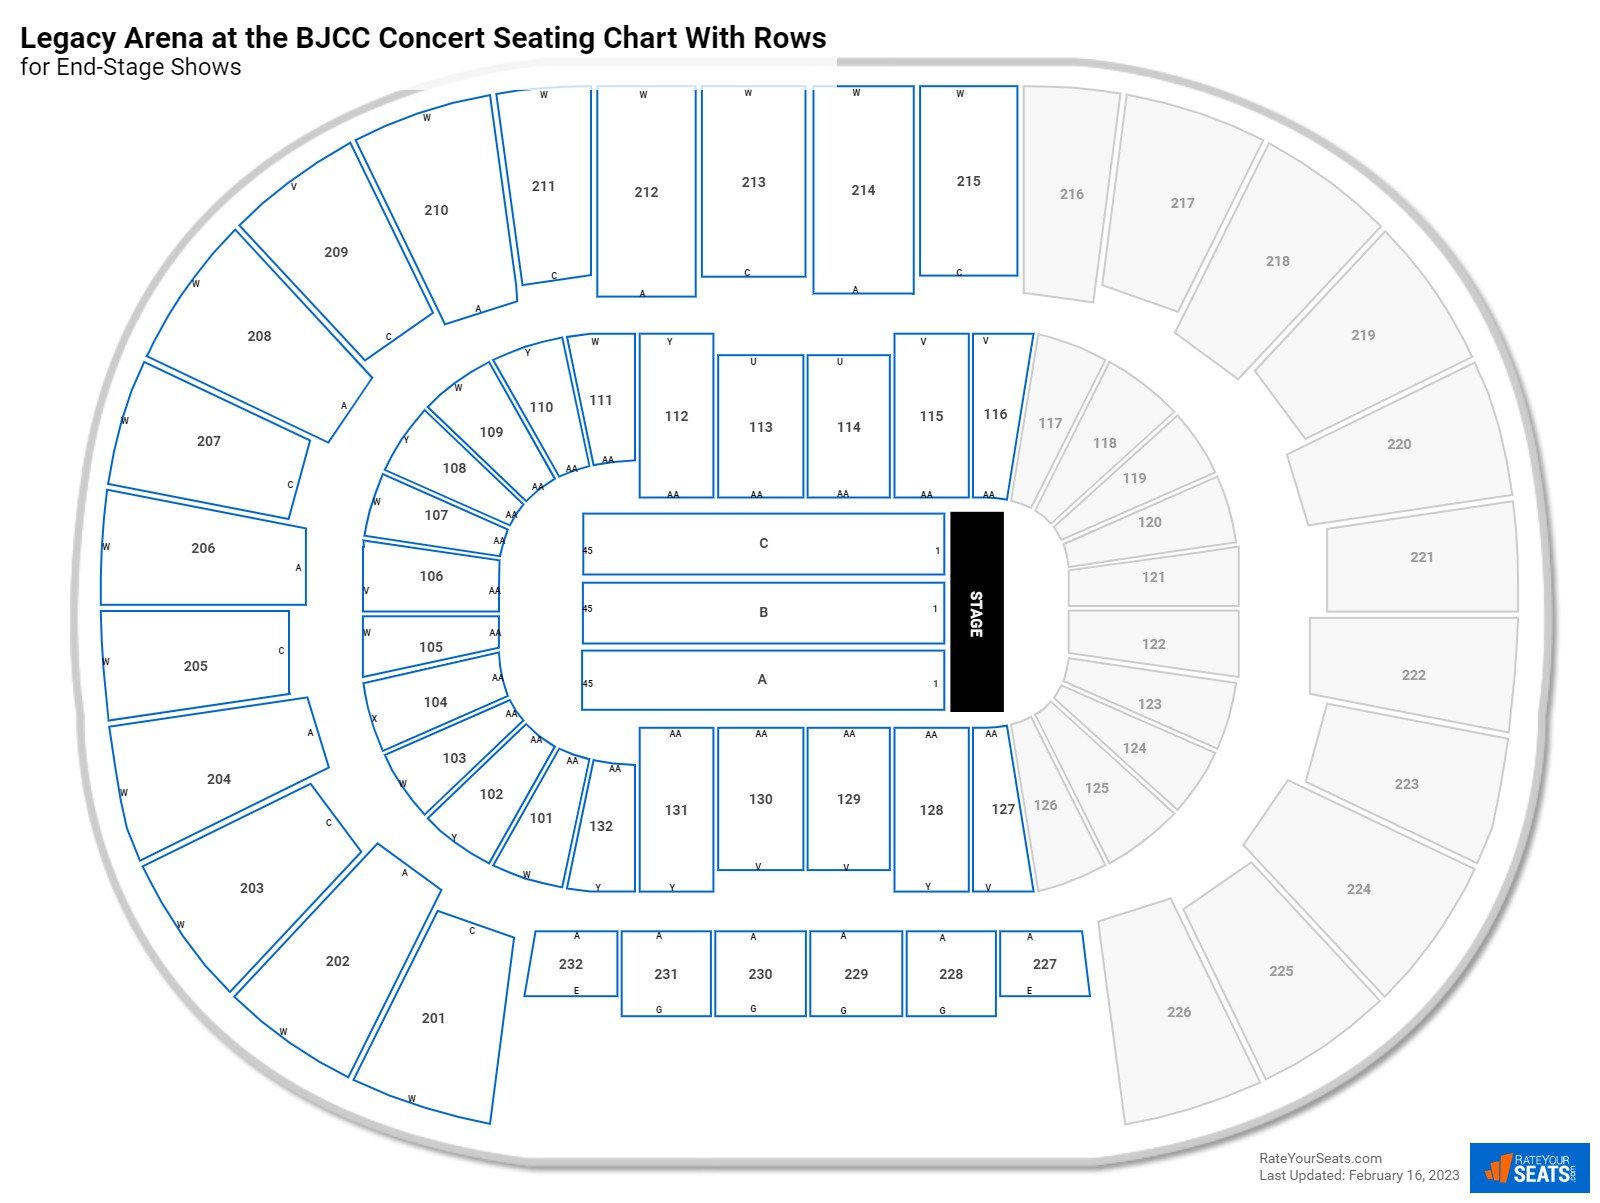 BJCC Arena Seating Chart - RateYourSeats.com